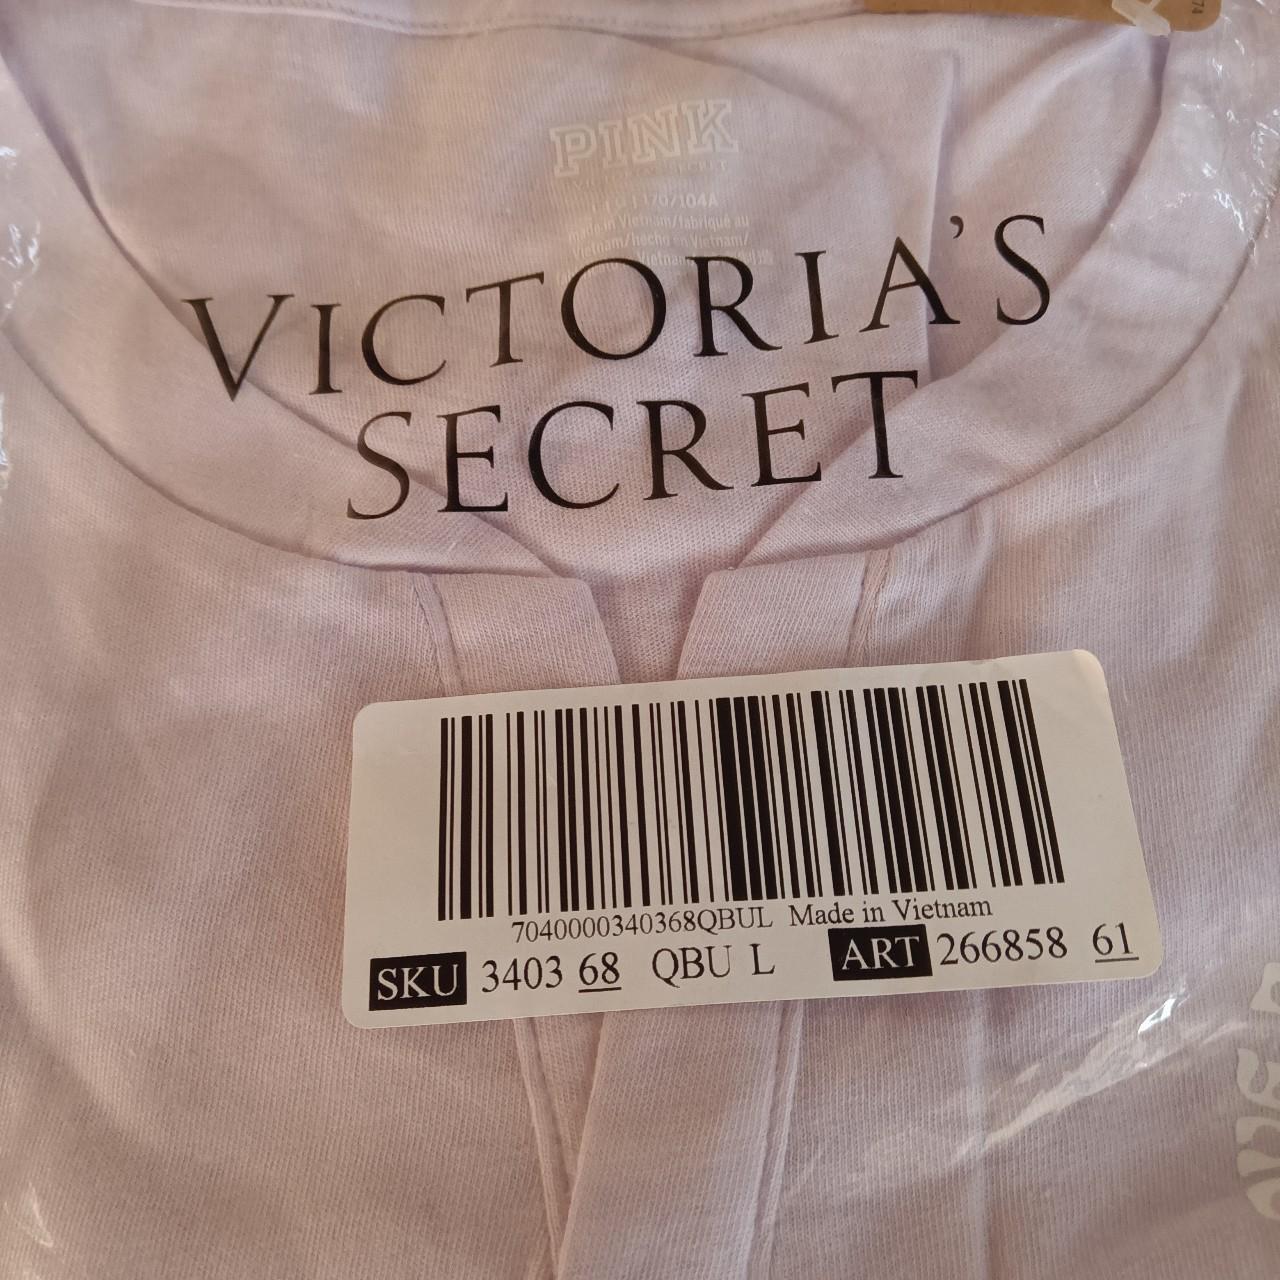 Women's size medium Victoria's secret's pink brand shirt